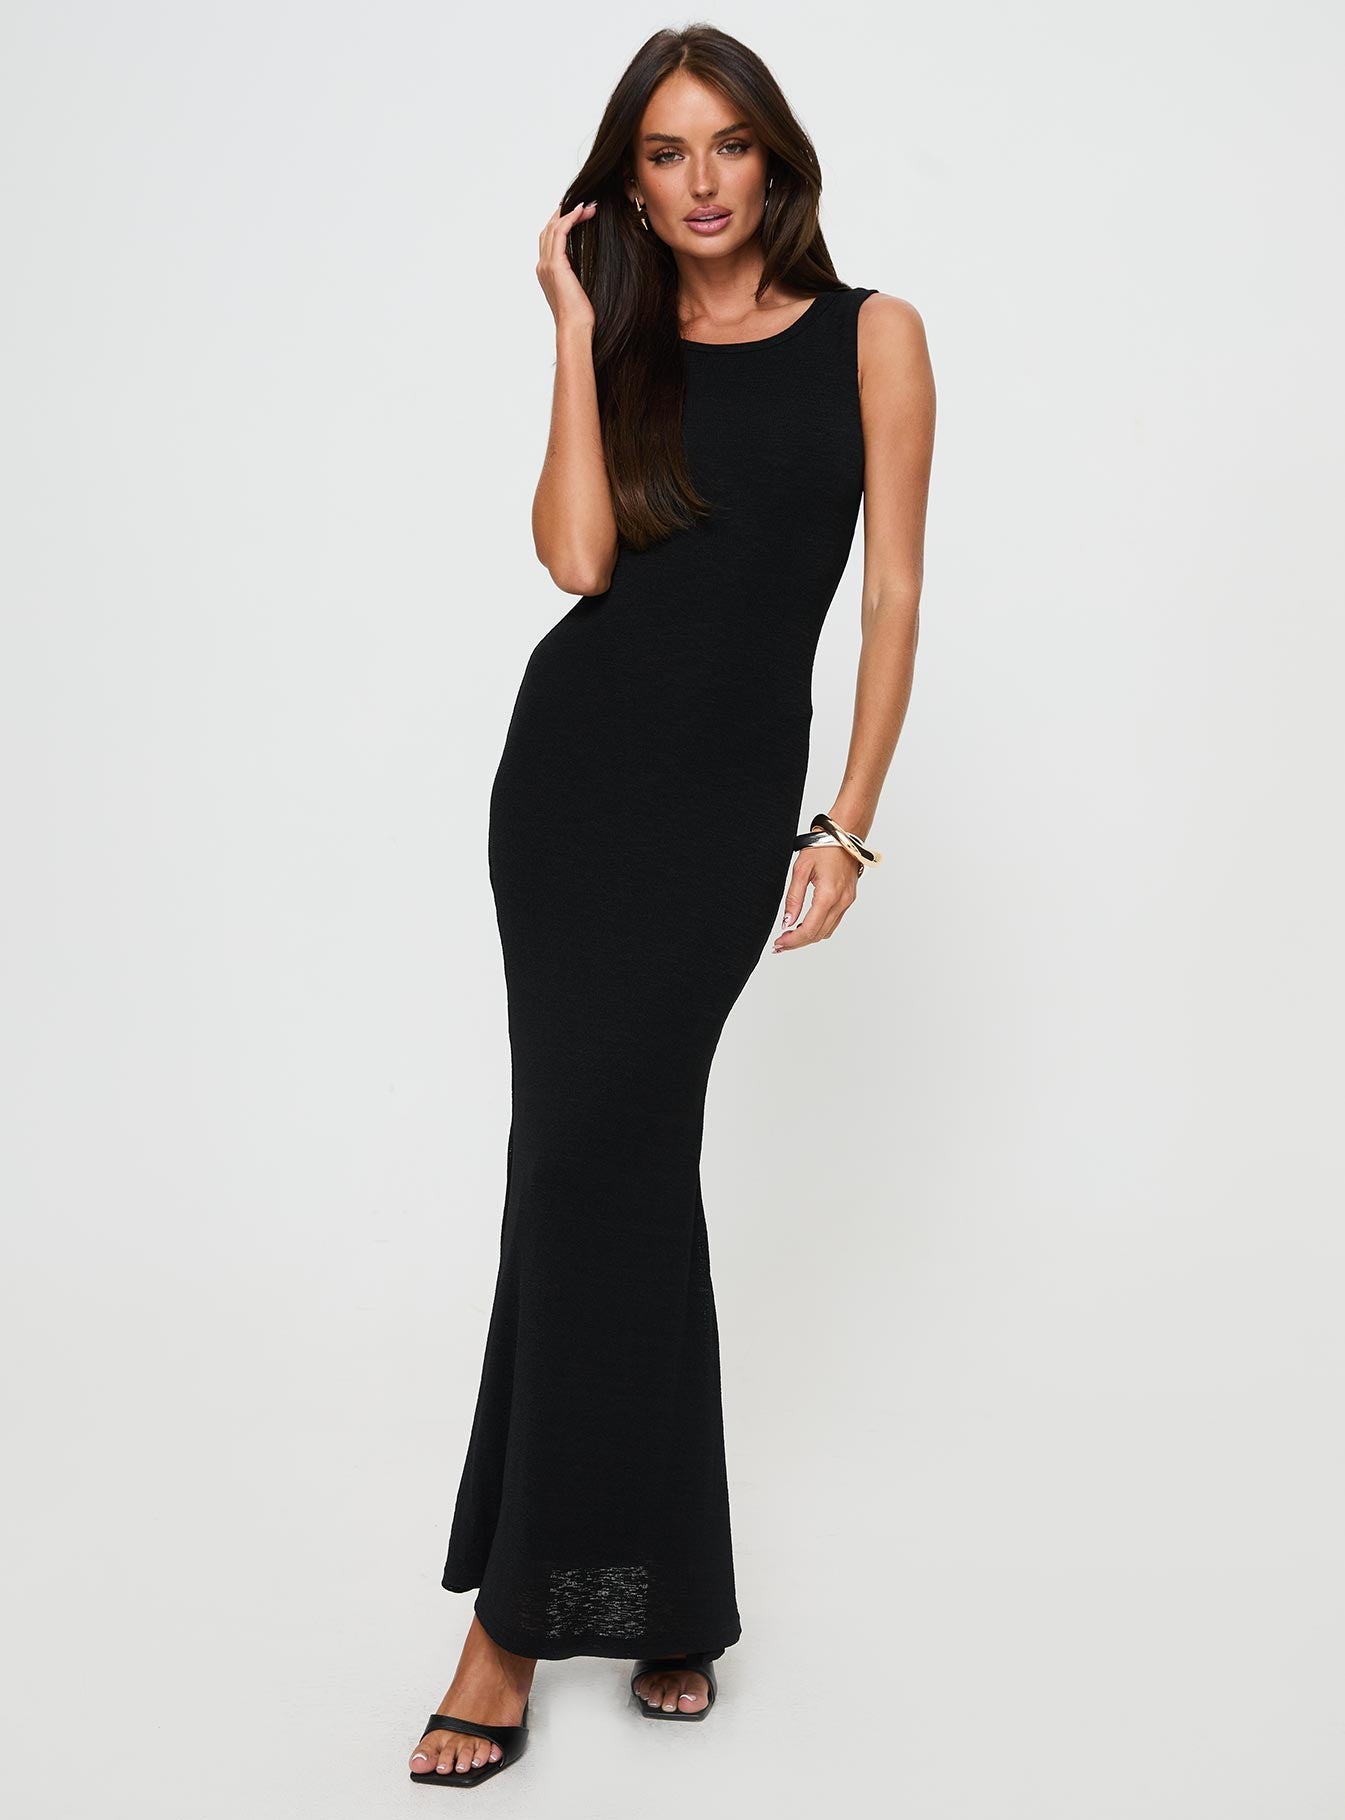 Shop Formal Dress - Ashen Maxi Dress Black fifth image